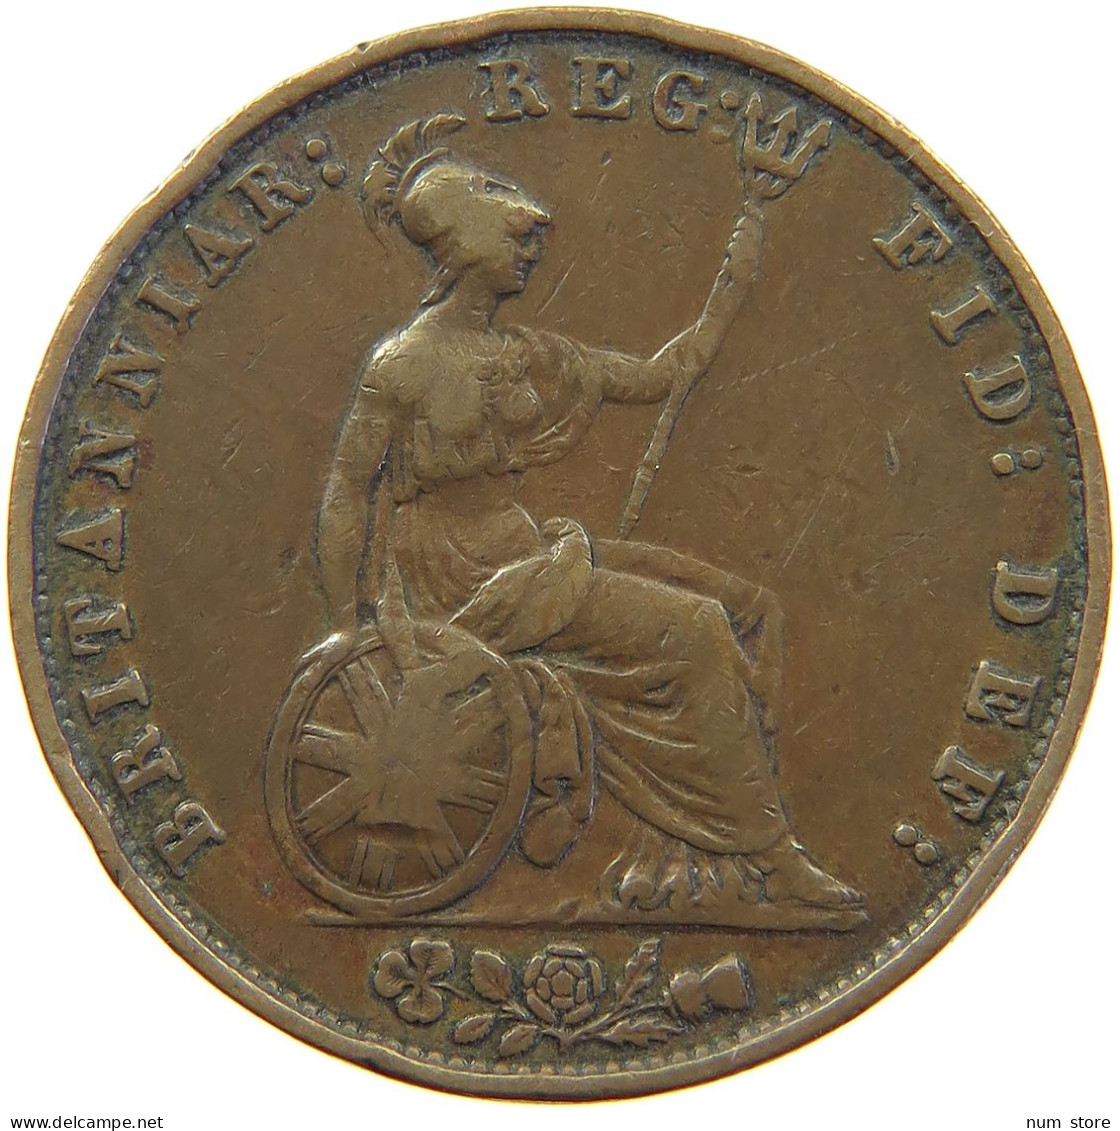 GREAT BRITAIN HALFPENNY 1858 Victoria 1837-1901 #s010 0277 - C. 1/2 Penny